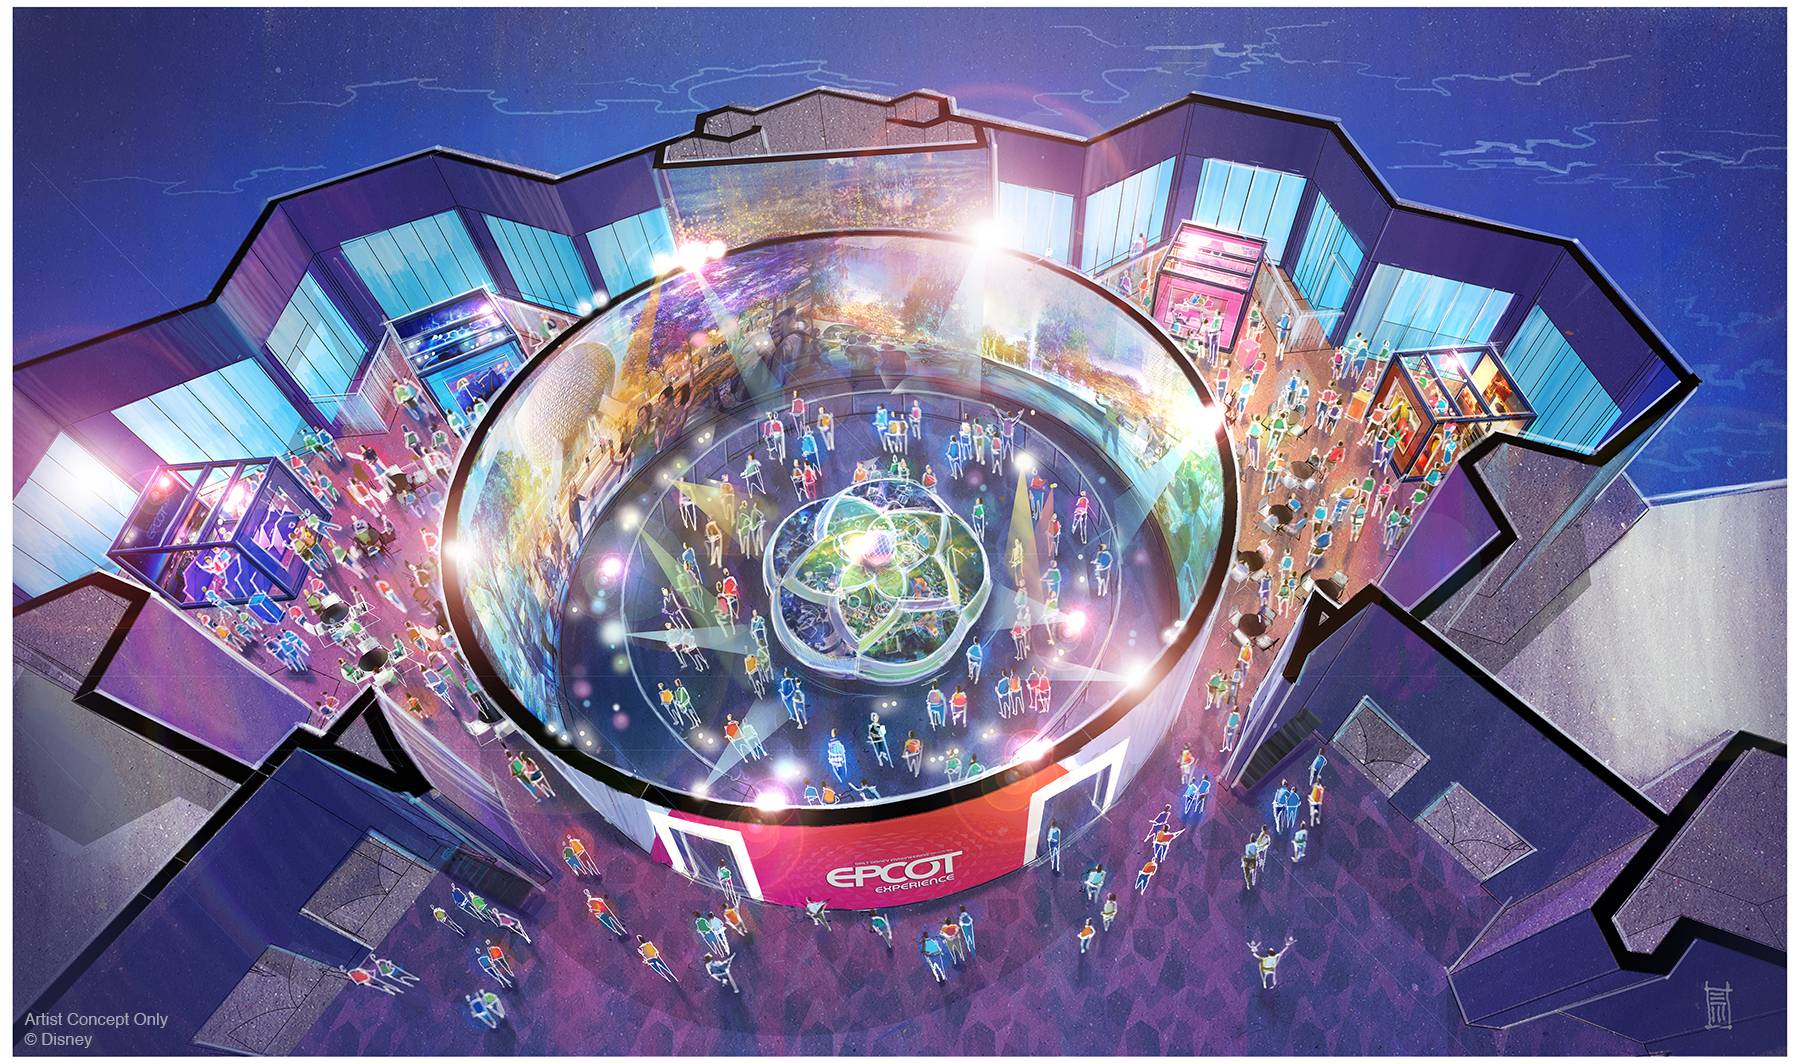 PHOTO - 'Walt Disney Imagineering presents the Epcot Experience' to open in October